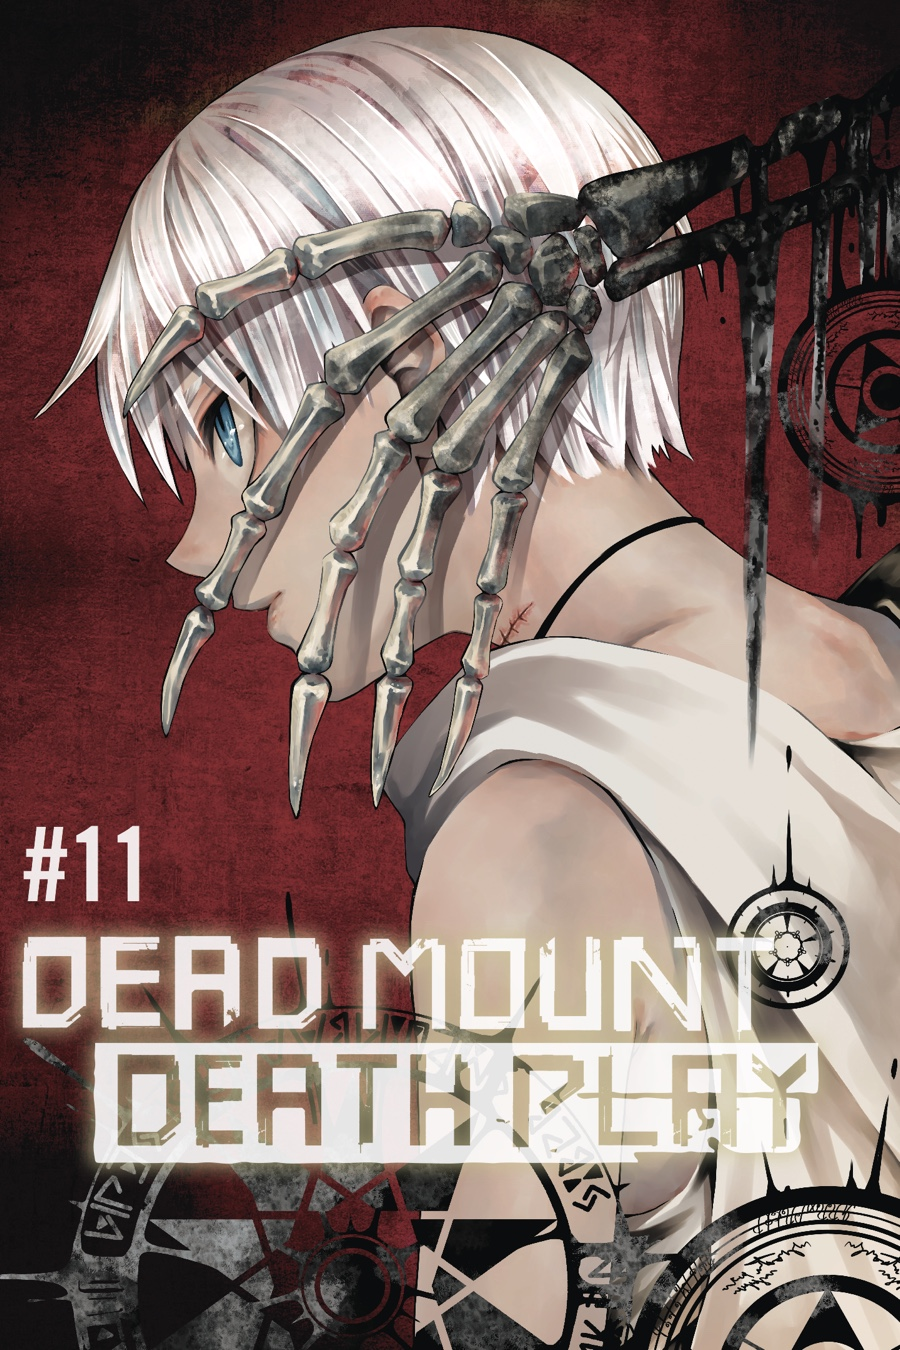 Kazuki Shinoyama (Dead Mount Death Play) - Pictures 